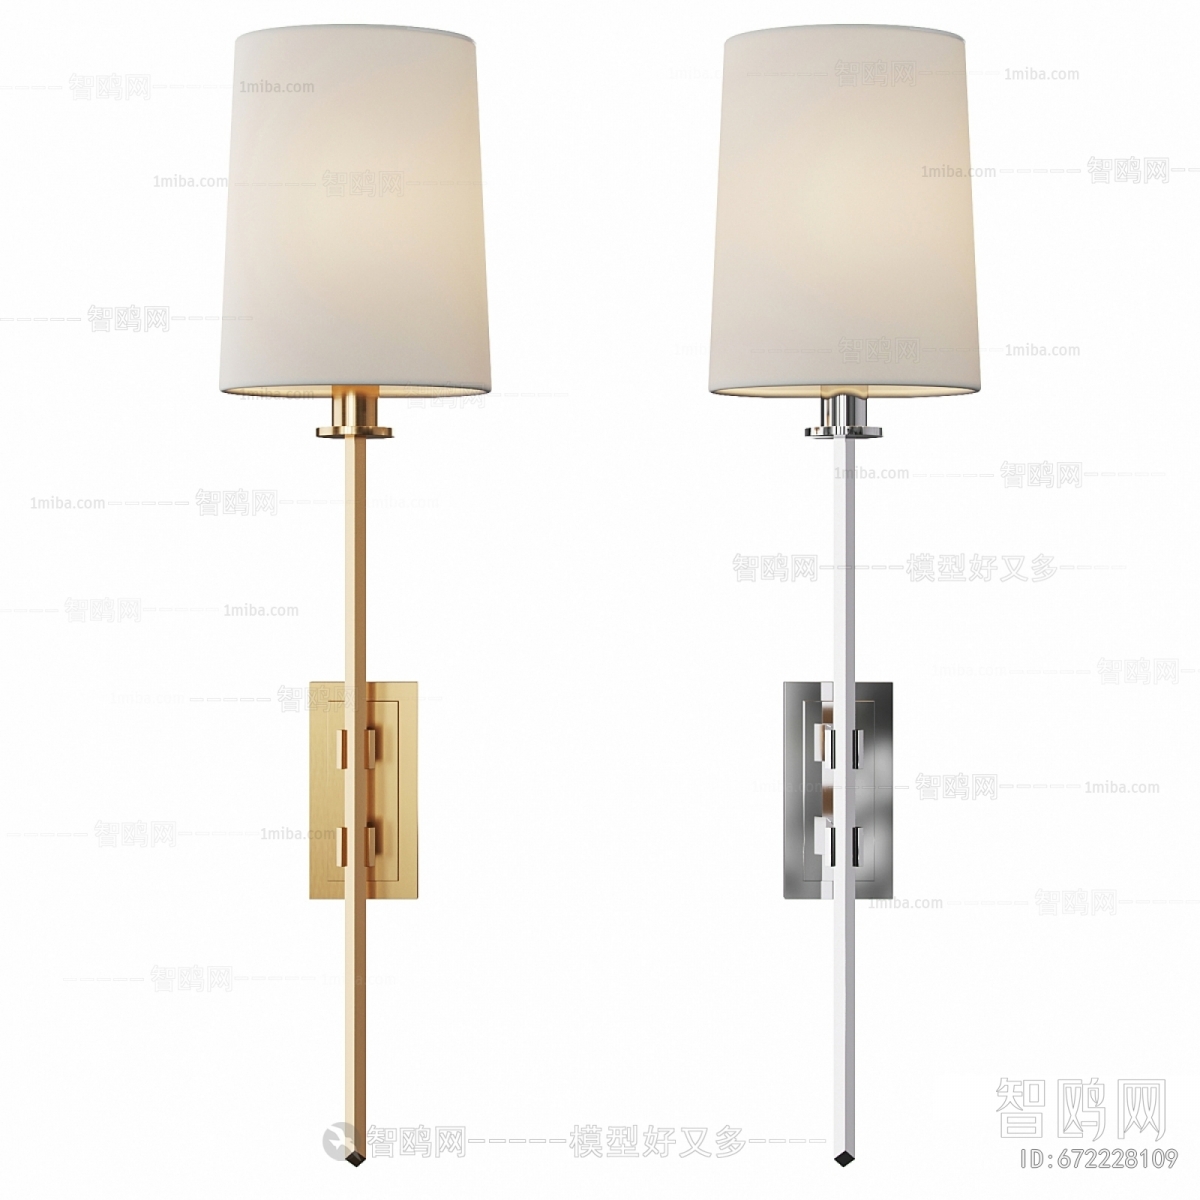 Simple European Style Wall Lamp